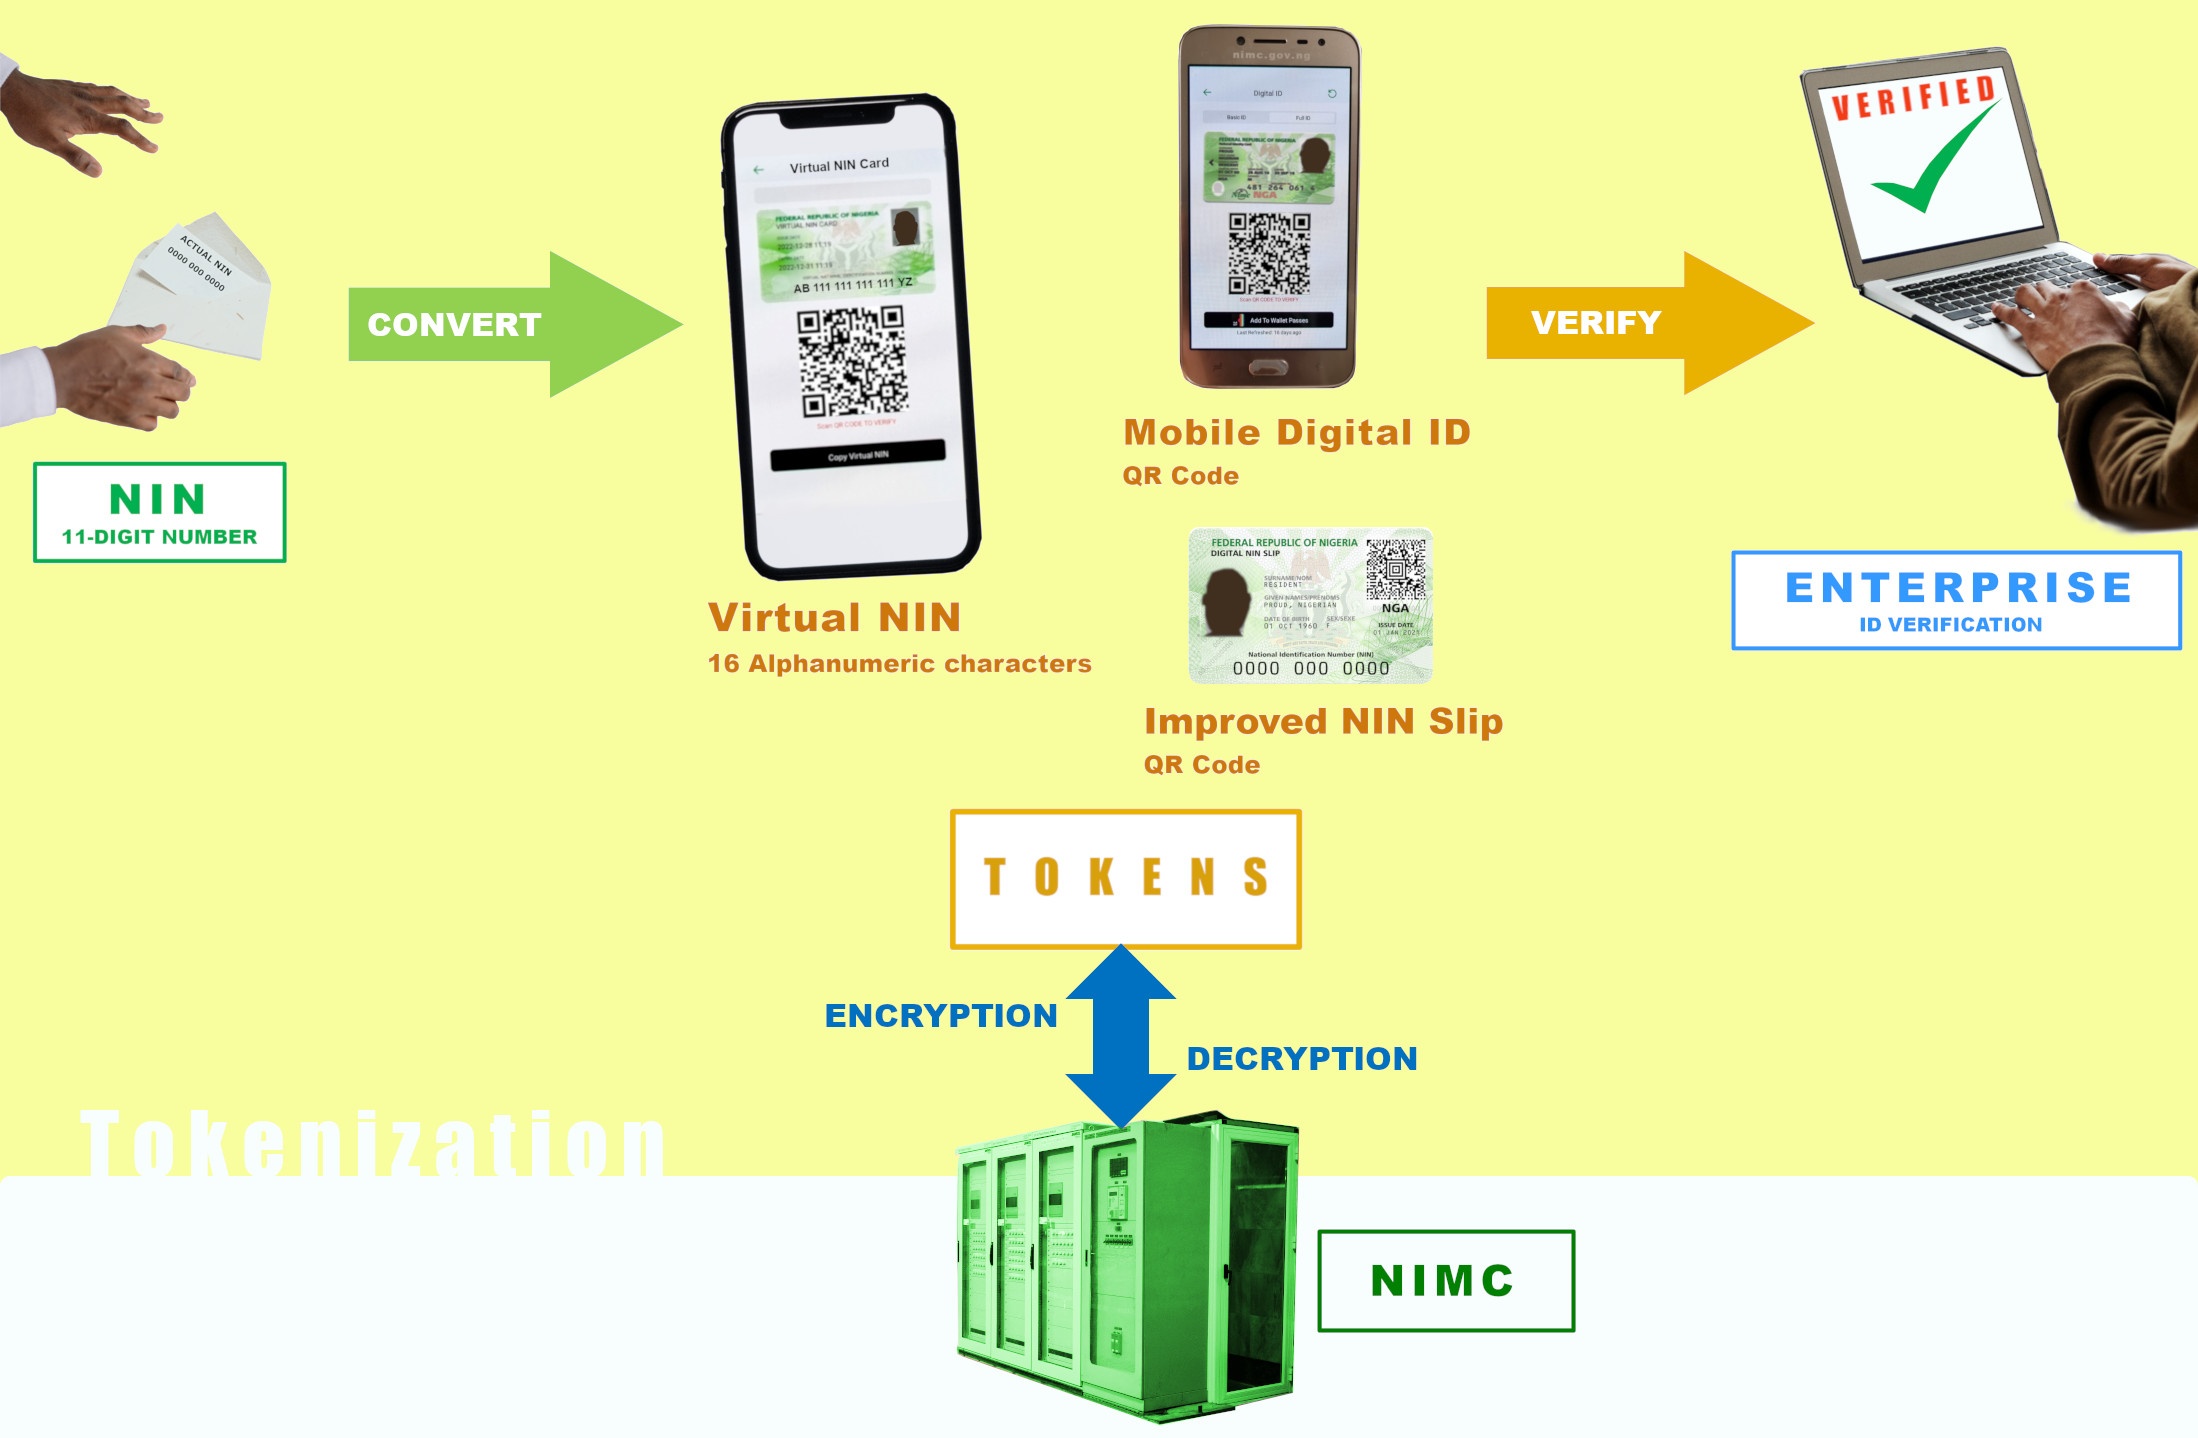 Visual representation of the NIN tokenization process